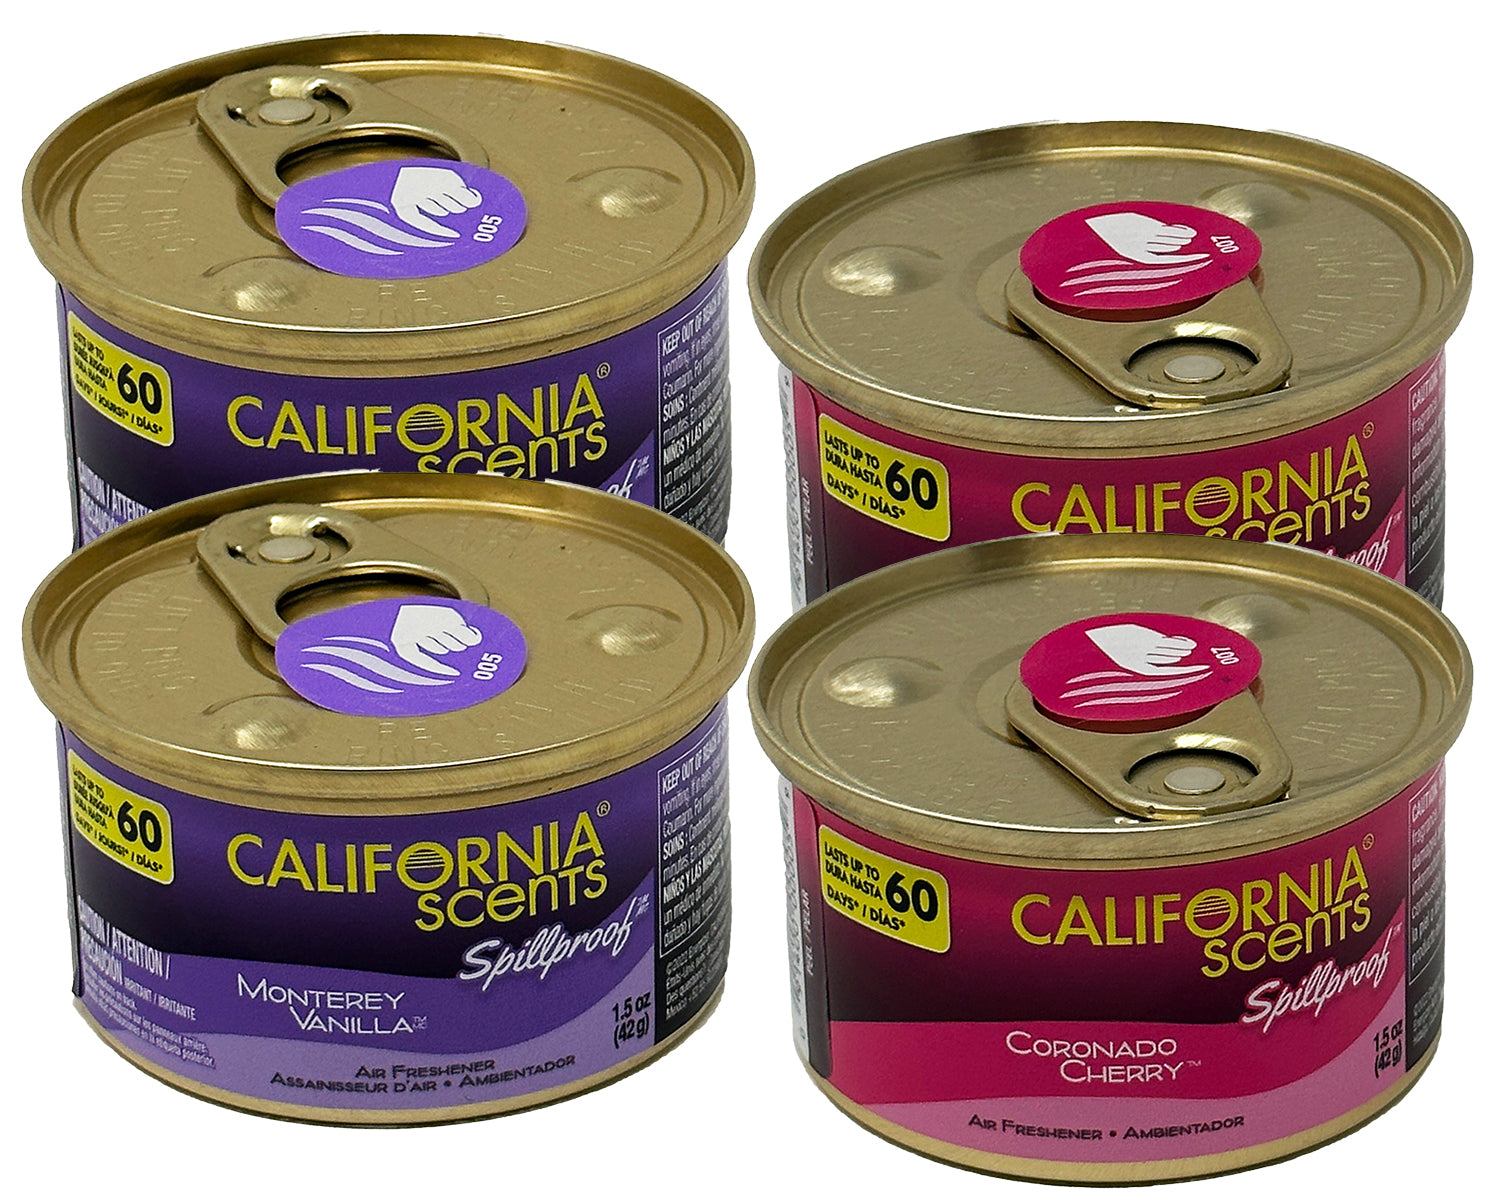 California Car Scents Monterey Vanilla